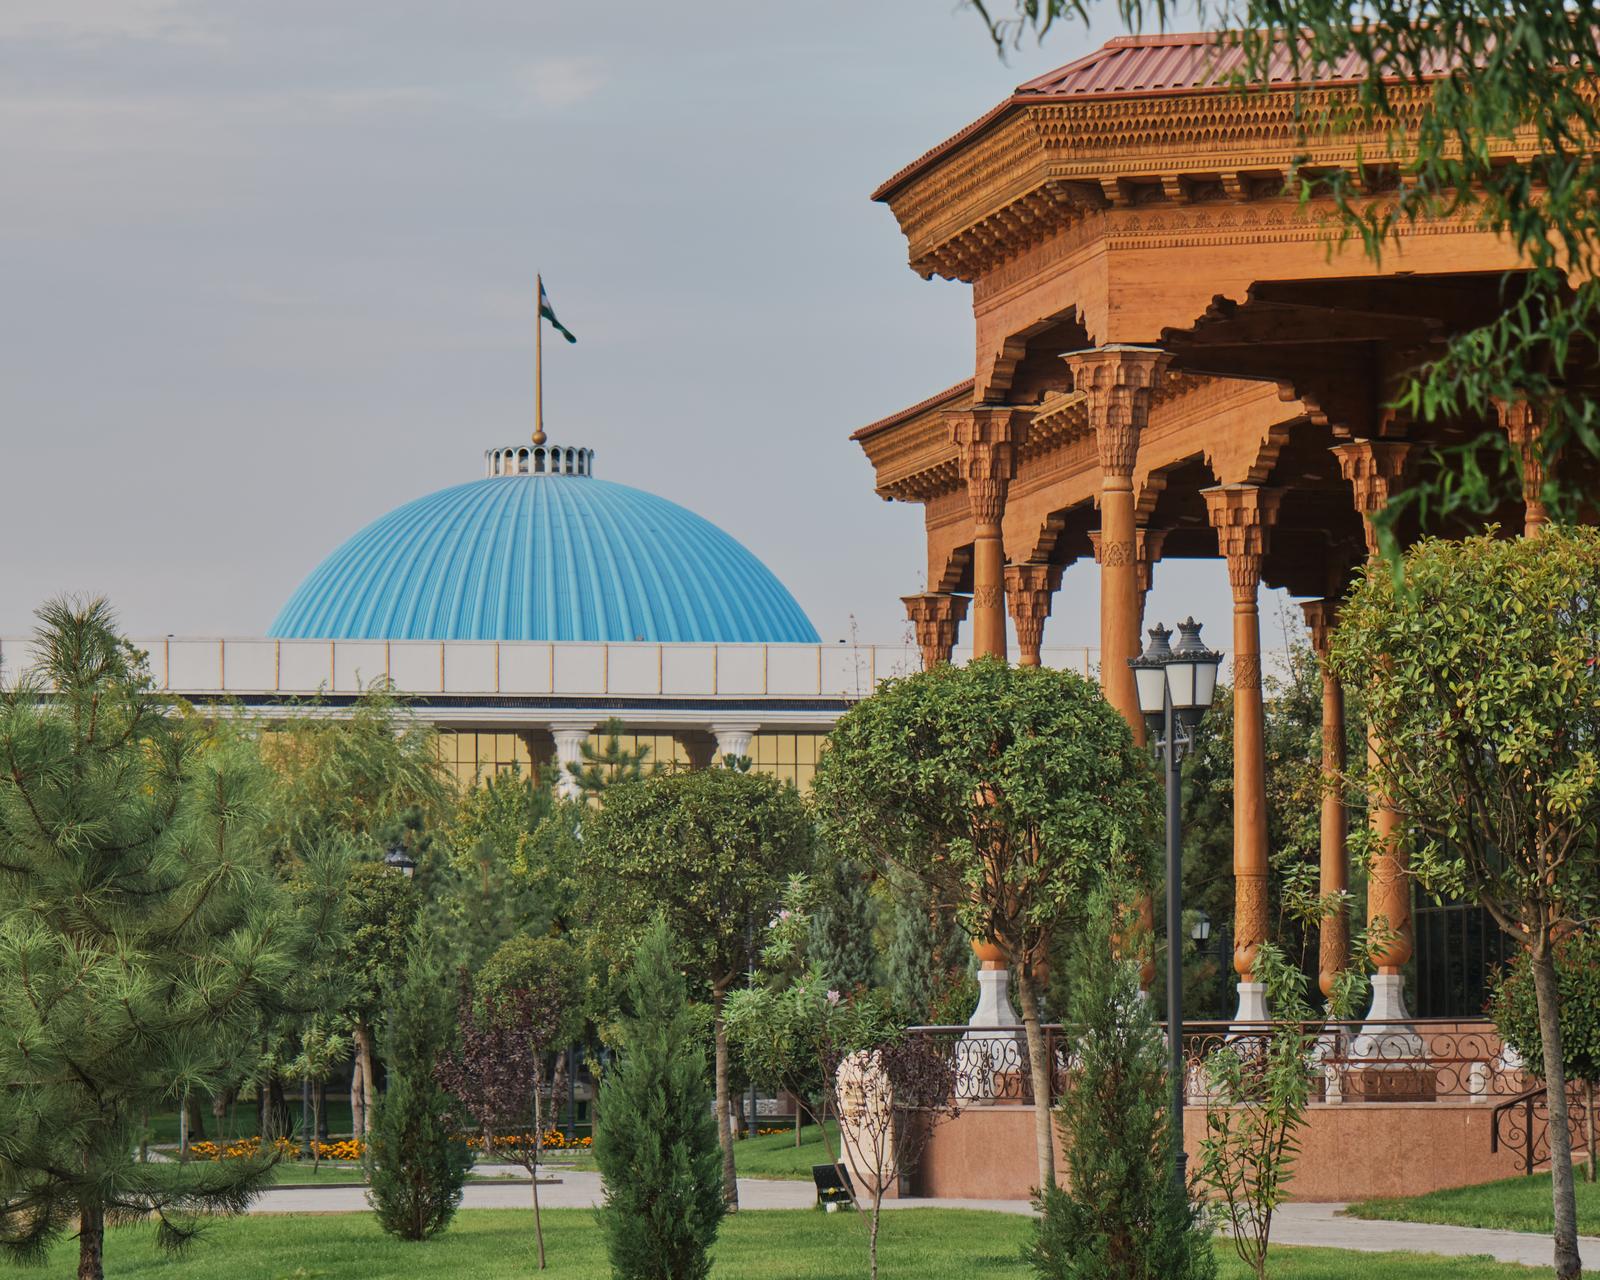 🗽 What Famous Landmark Should You Visit Next Based on Your A-Z Travel Bucket List? Uzbekistan